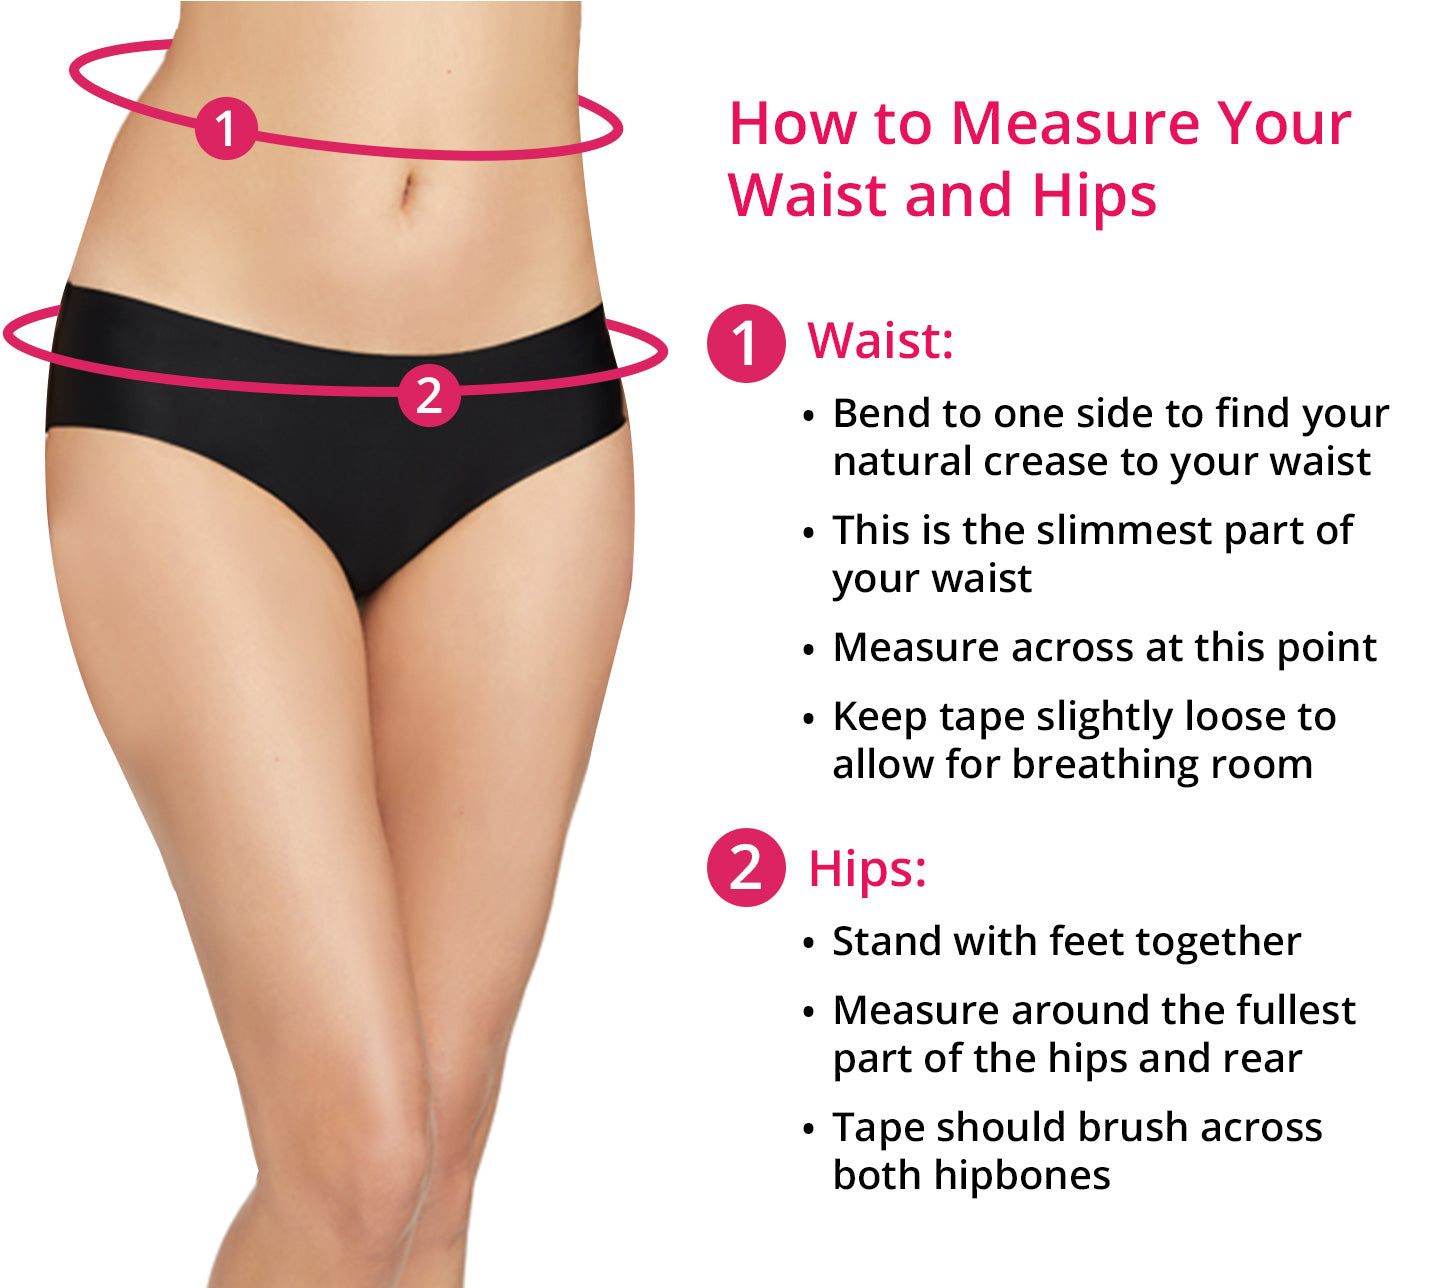 Nabtos Women's Cotton Underwear Bikini Stripes Panties (Pack of 6)